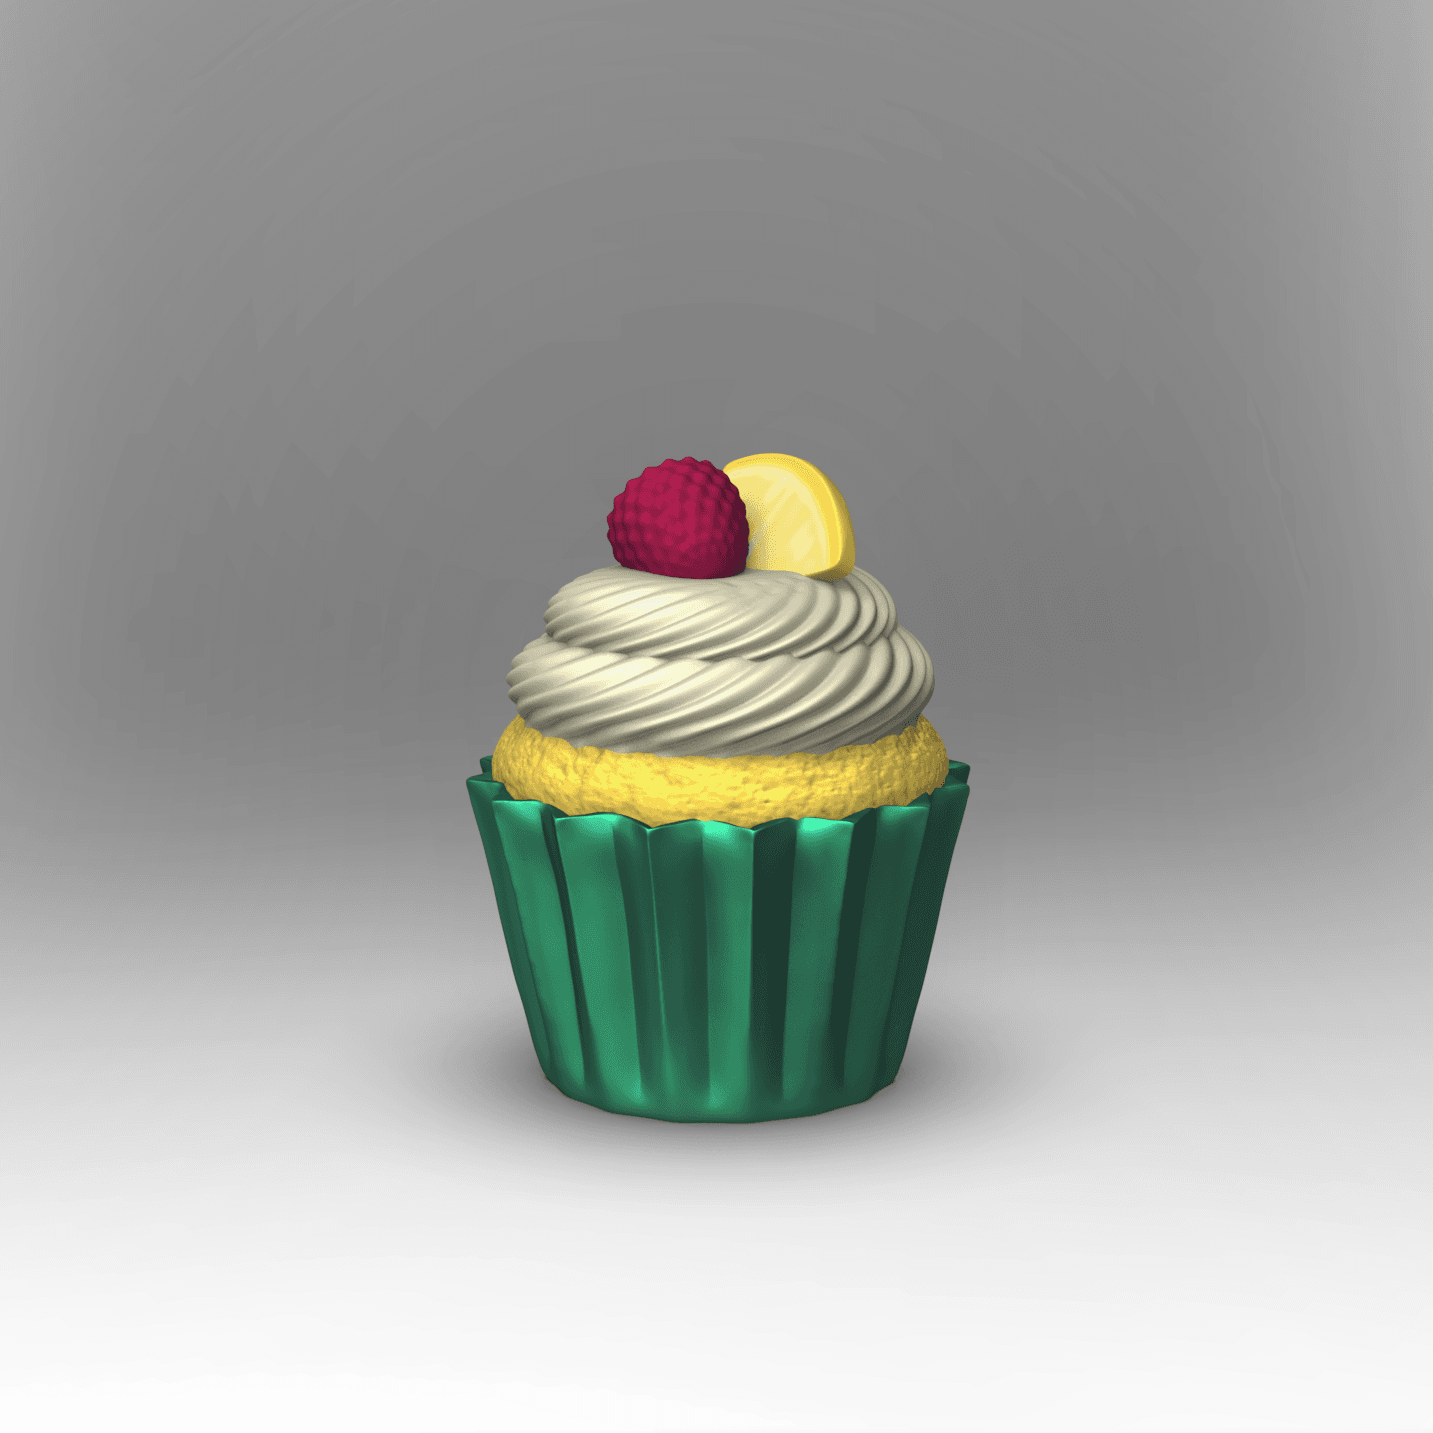 Cupcake with Fruit +MMU Files 3d model